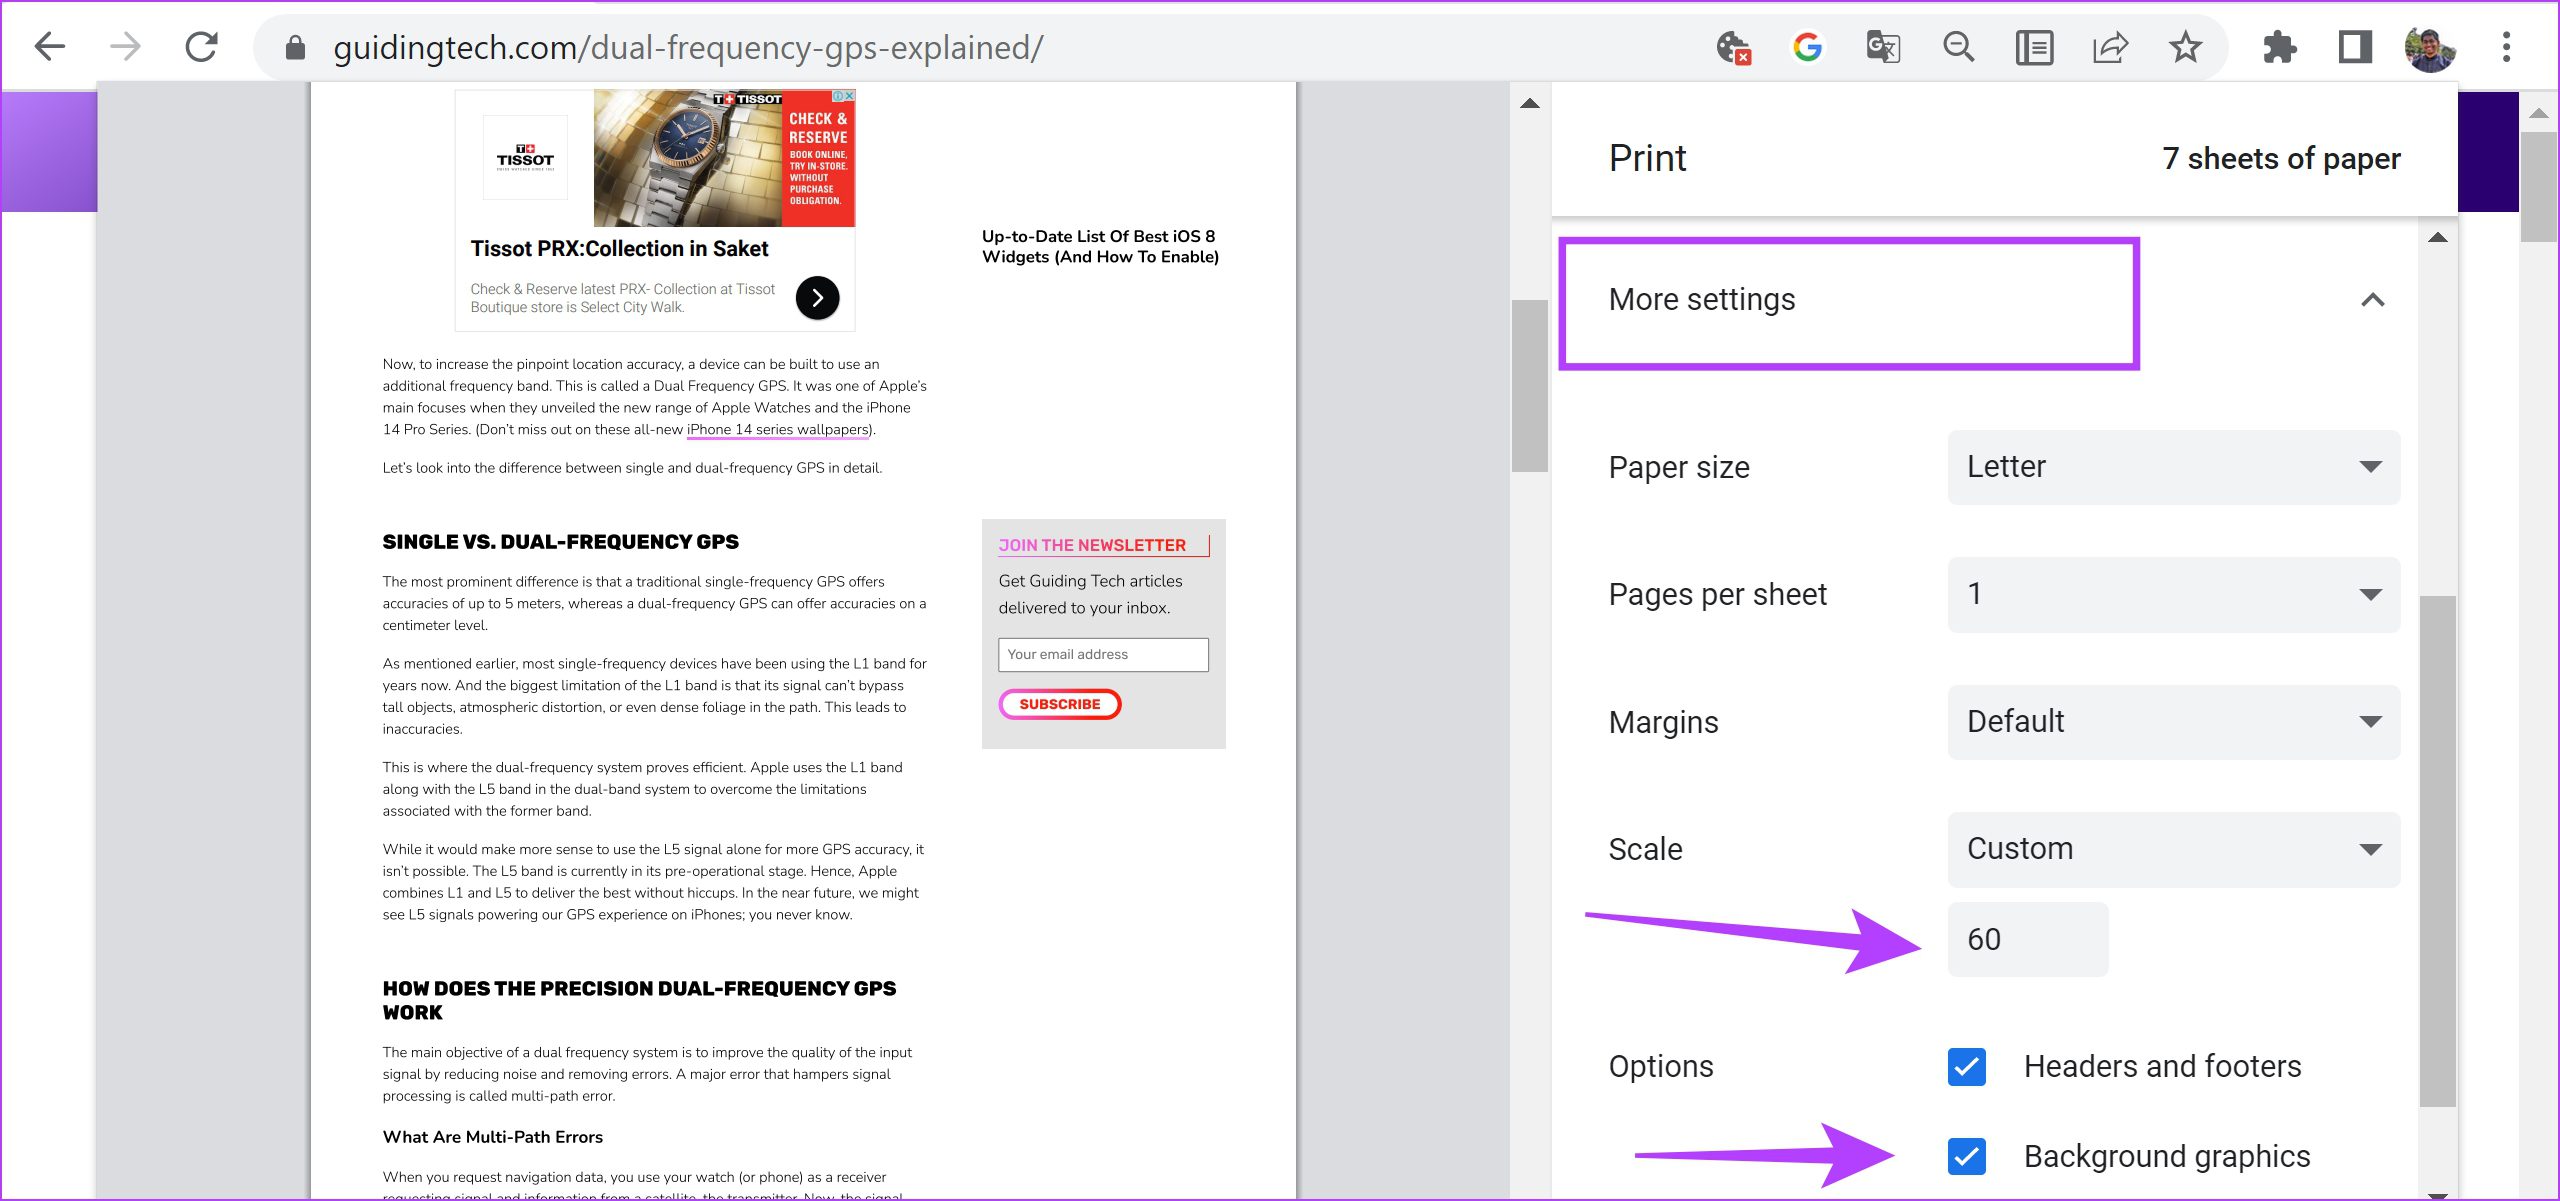 How to Take Full Page Screenshots on Google Chrome - 78